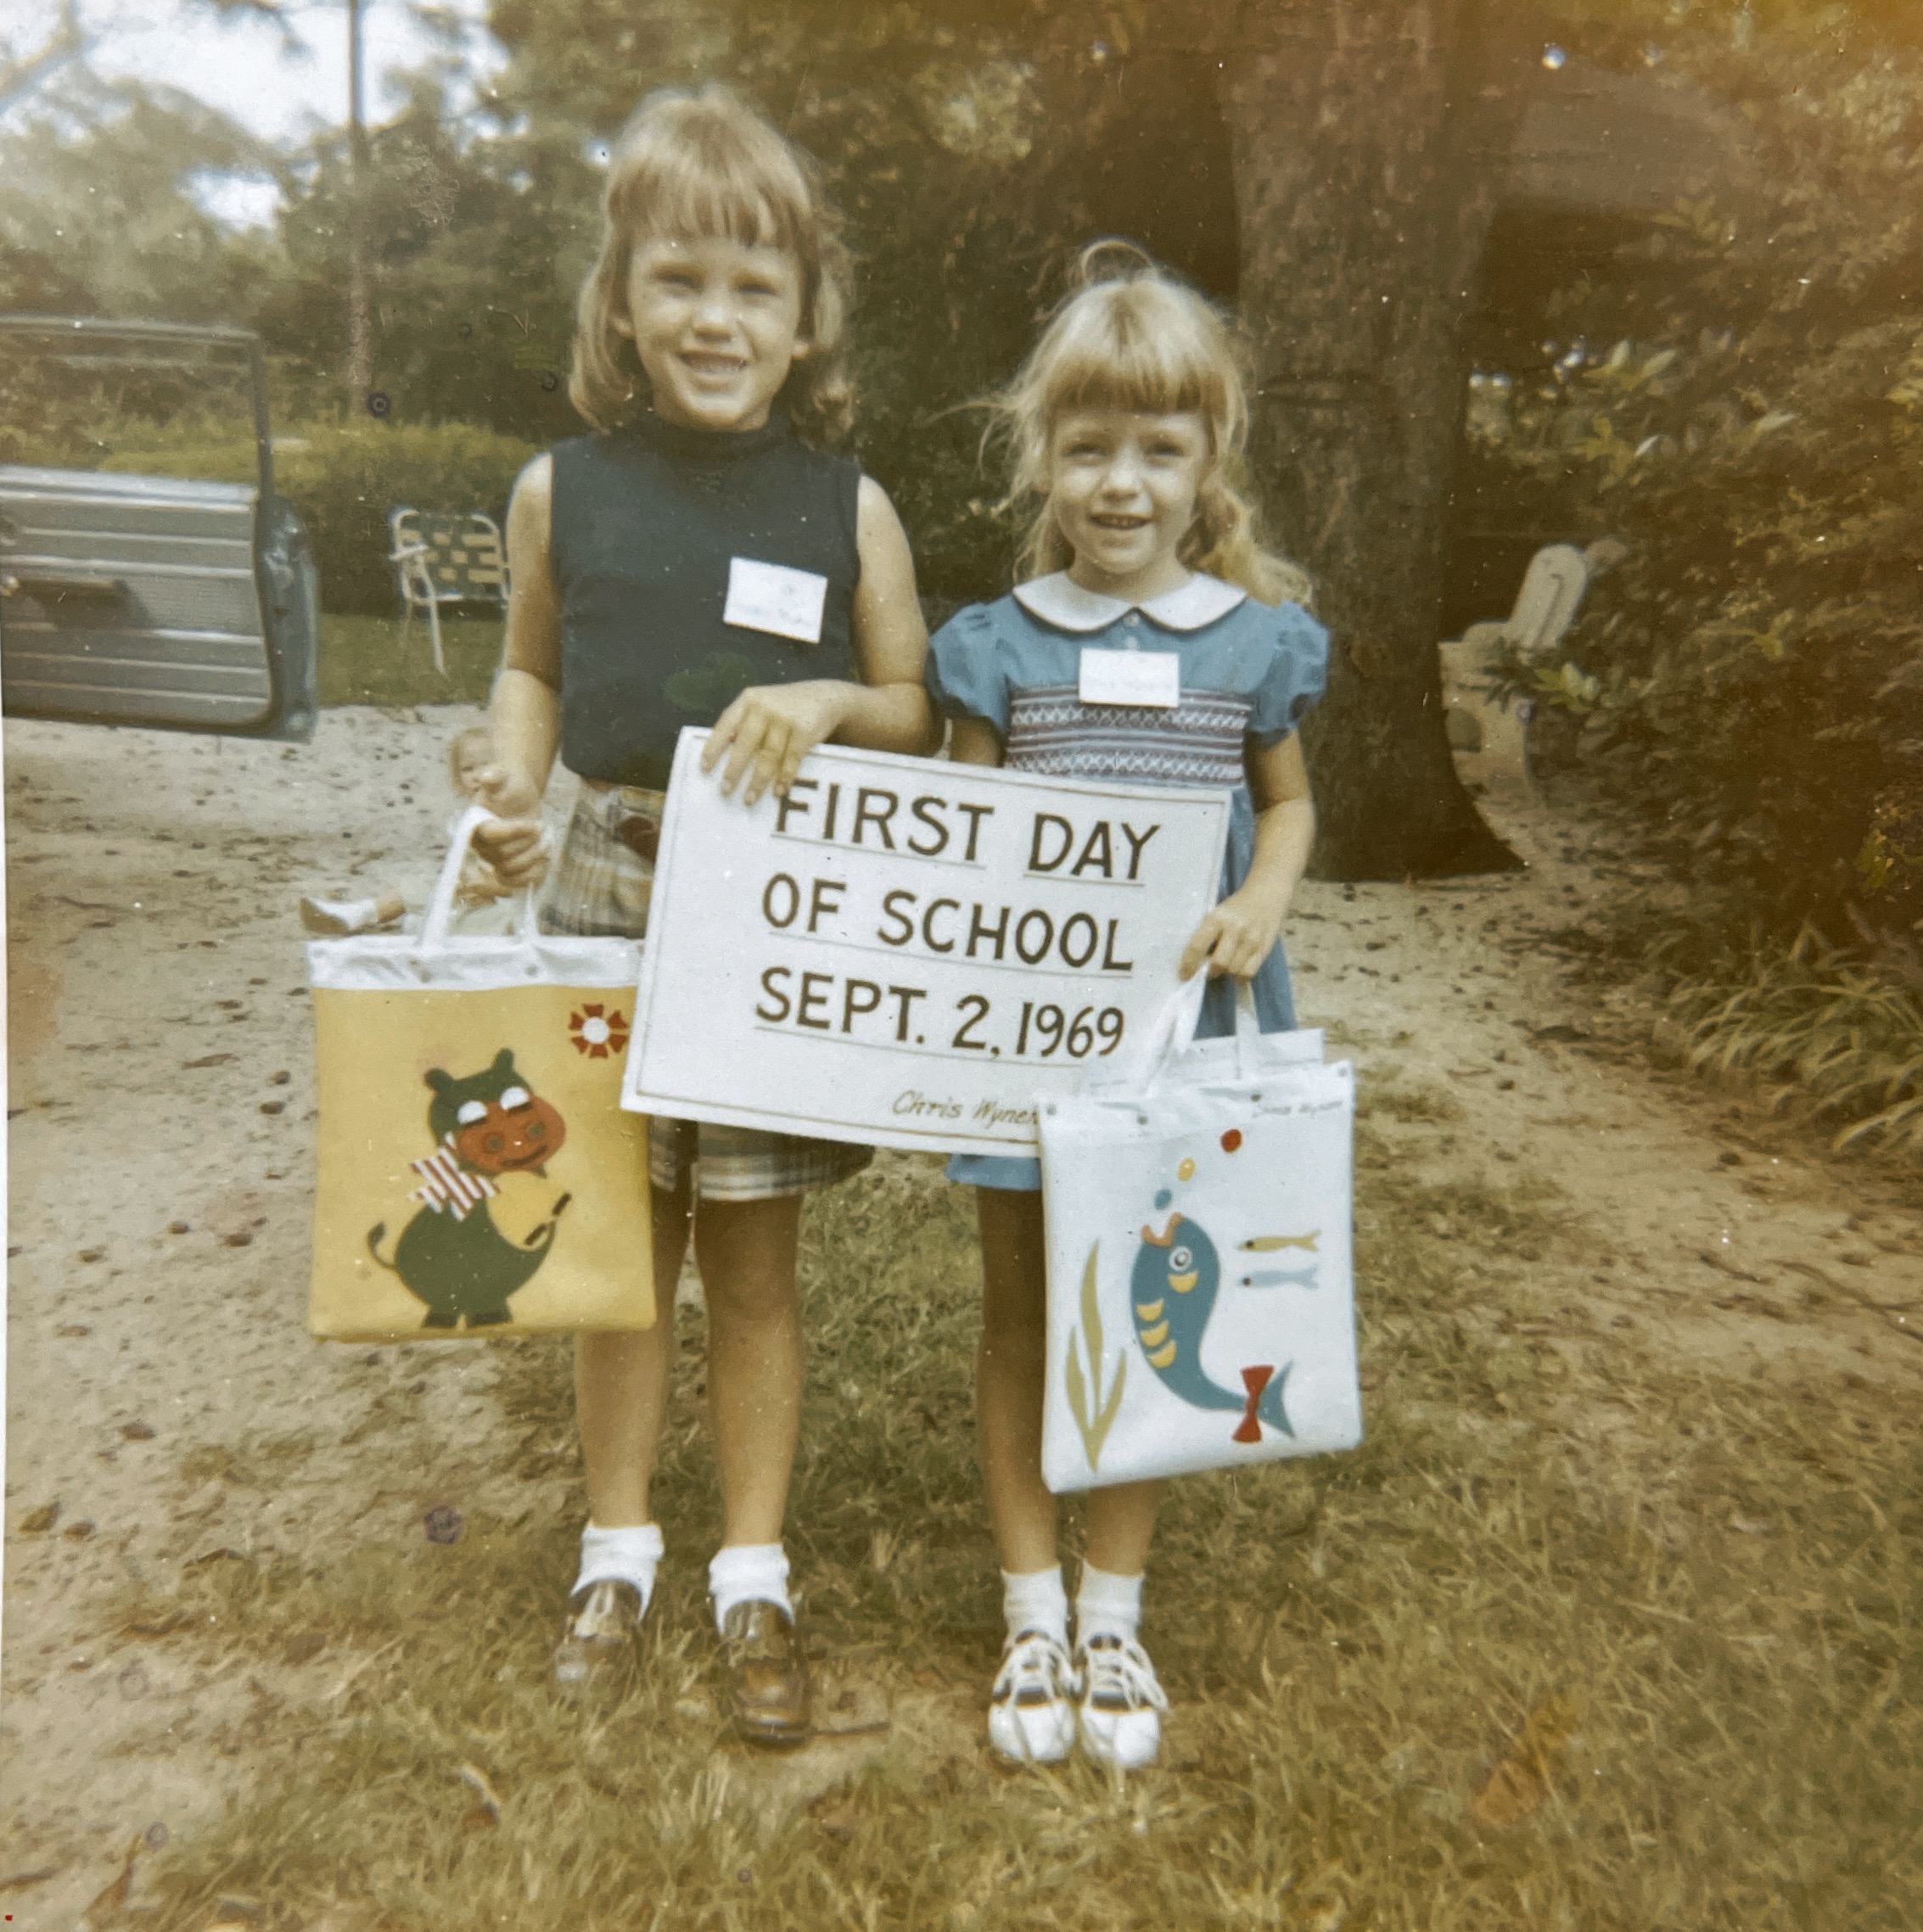 Debbie Puckett and Chris Wynens, first day of school - Dr John H Heard School - Sept 2, 1969